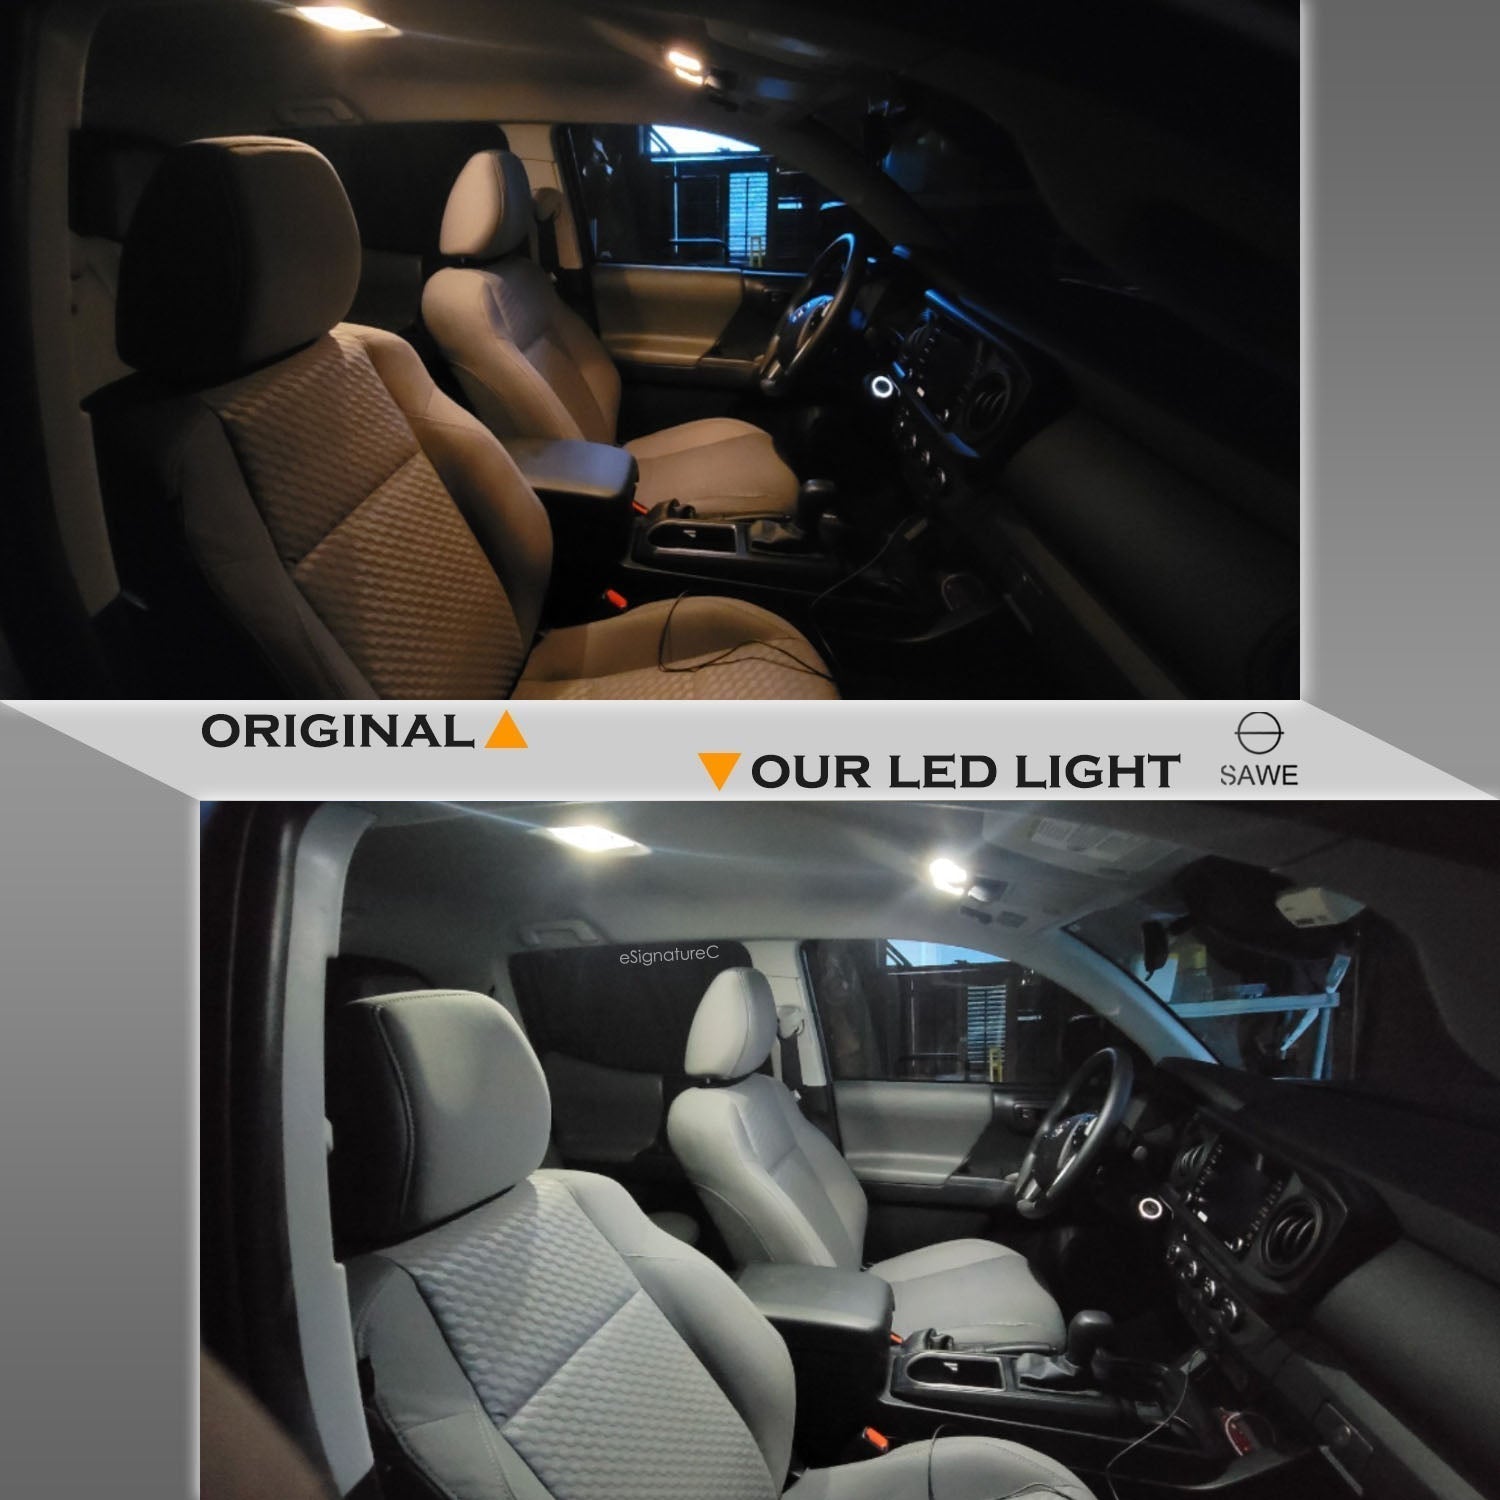 For Toyota Solara Interior LED Lights - Dome & Map Lights Package Kit for 2004 - 2008 - White